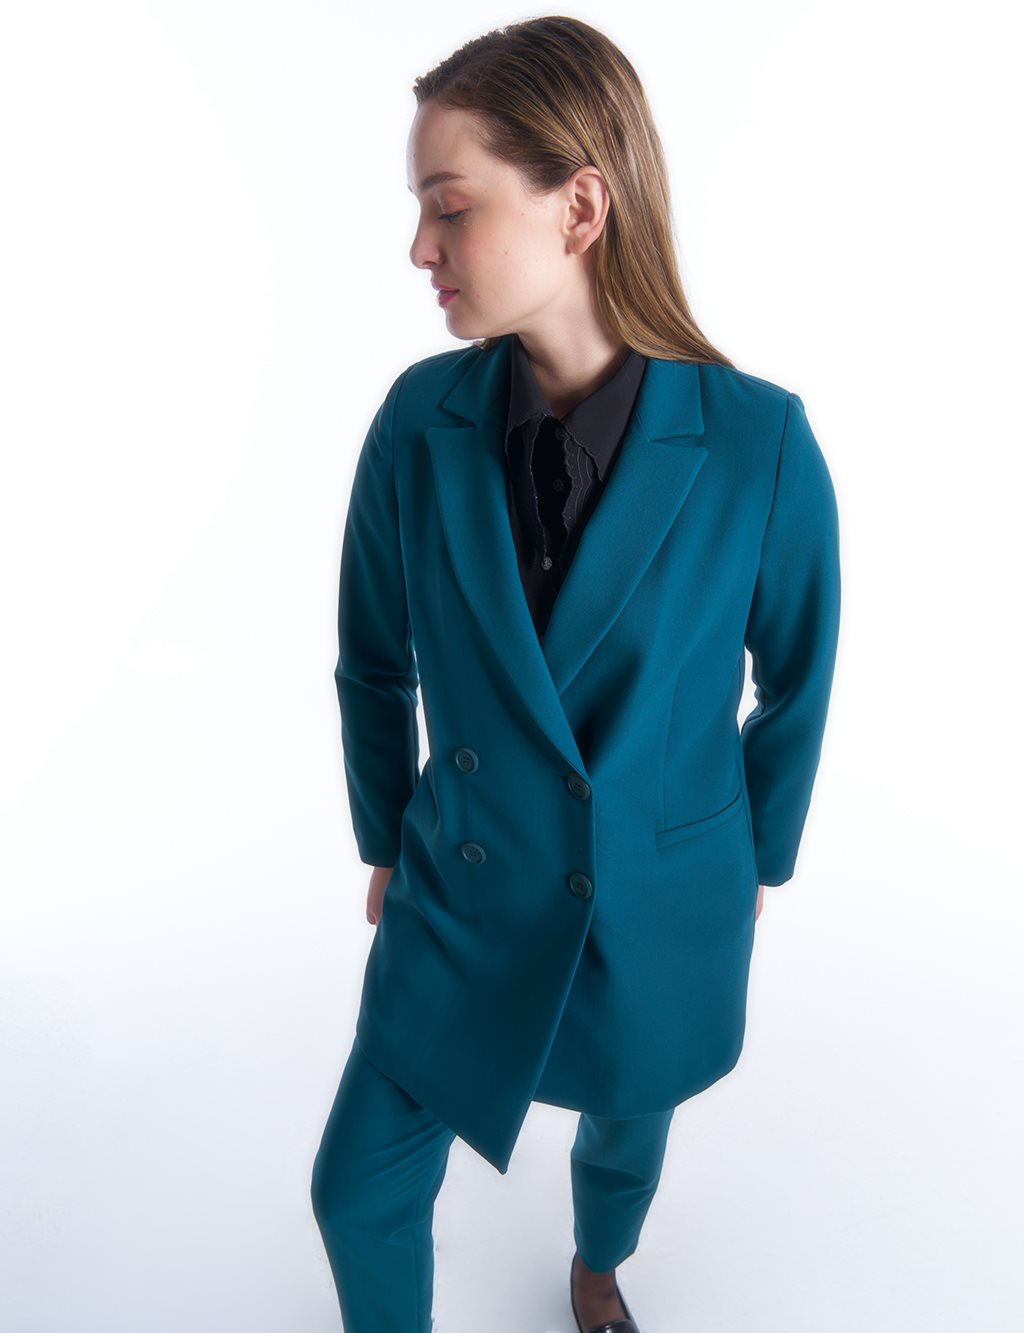 Blazer Jacket Suit Emerald